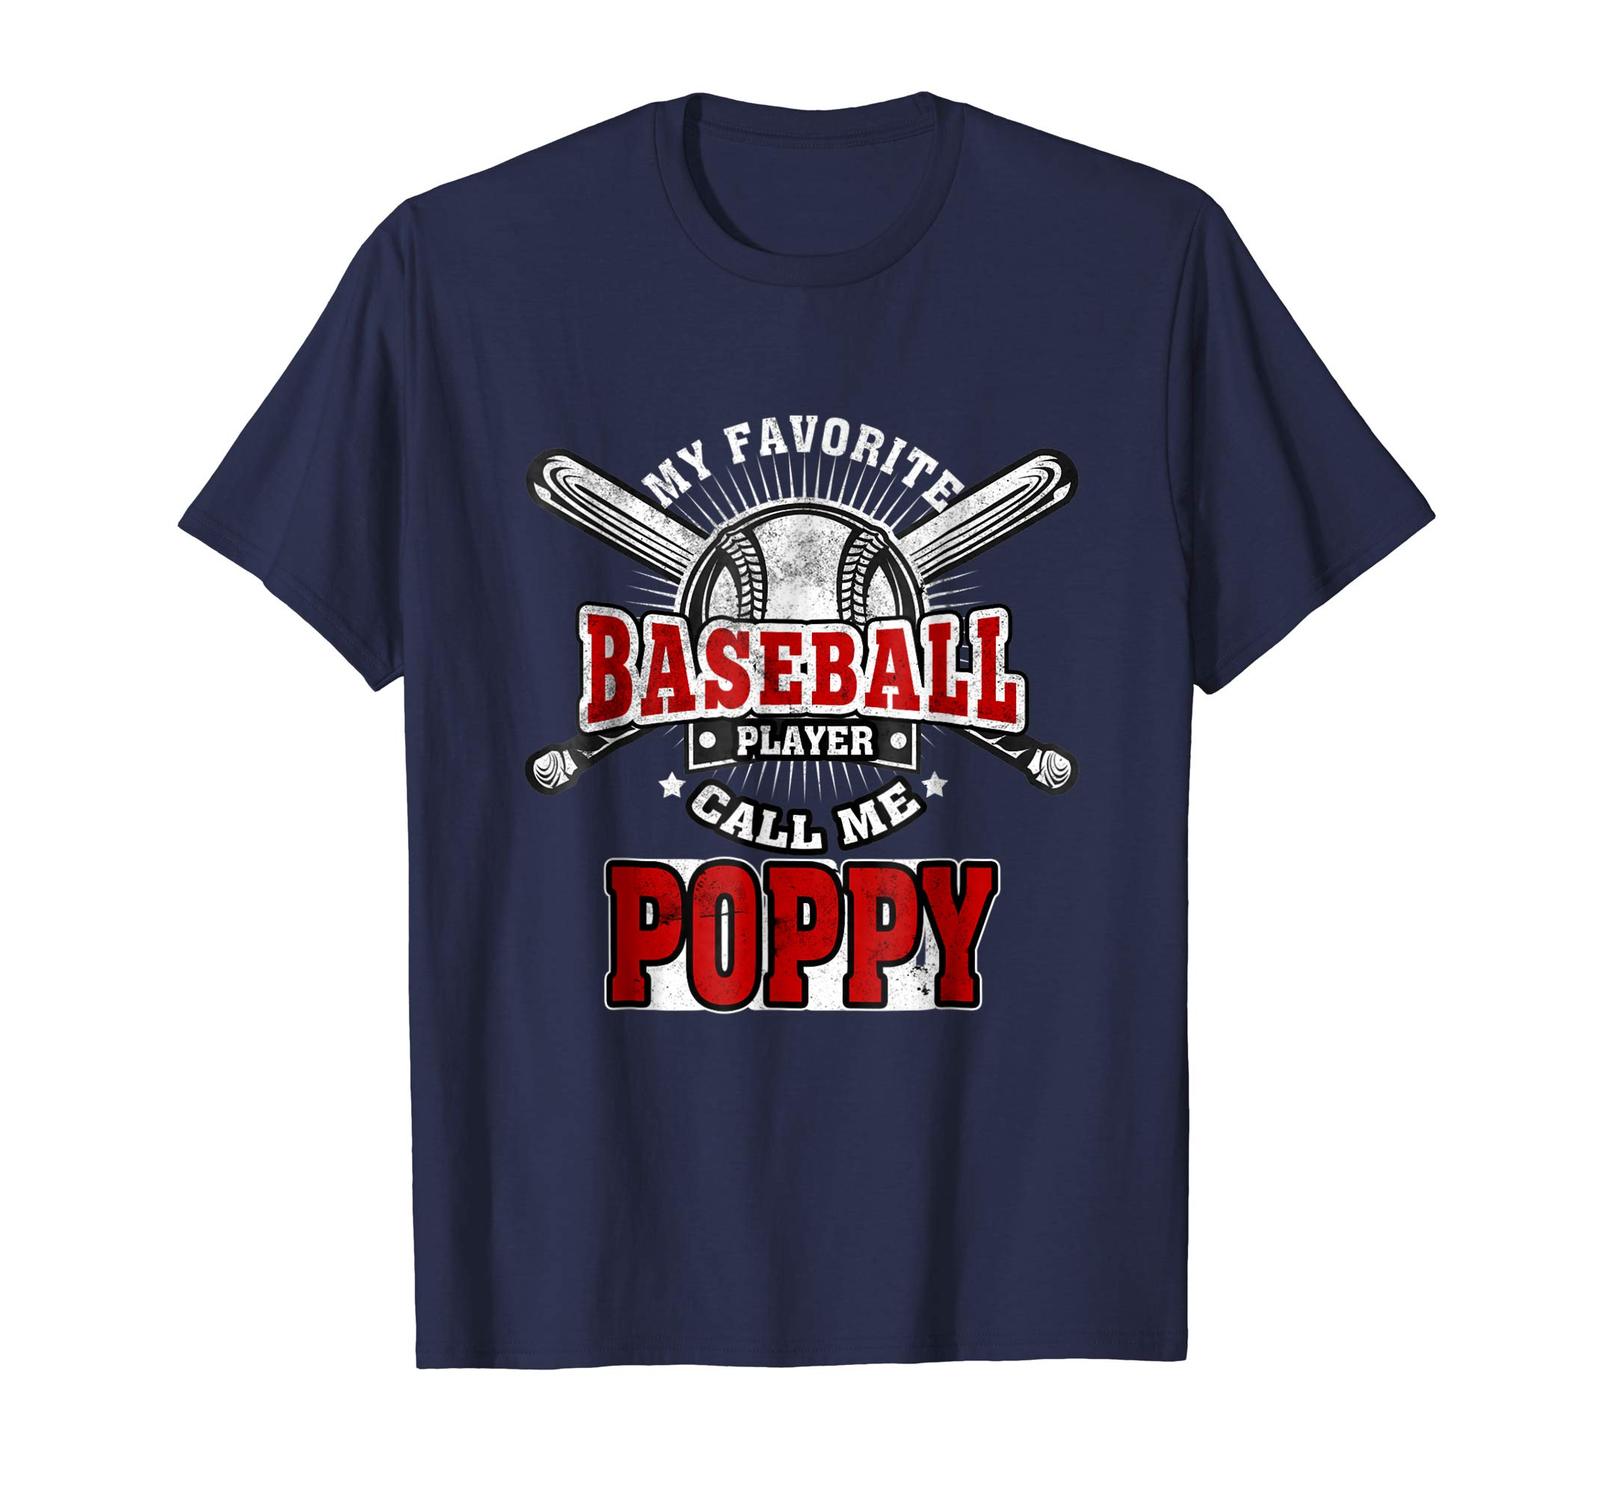 Dog Fashion - Funny My Favorite Baseball Player Calls Me POPPY TShirt Men